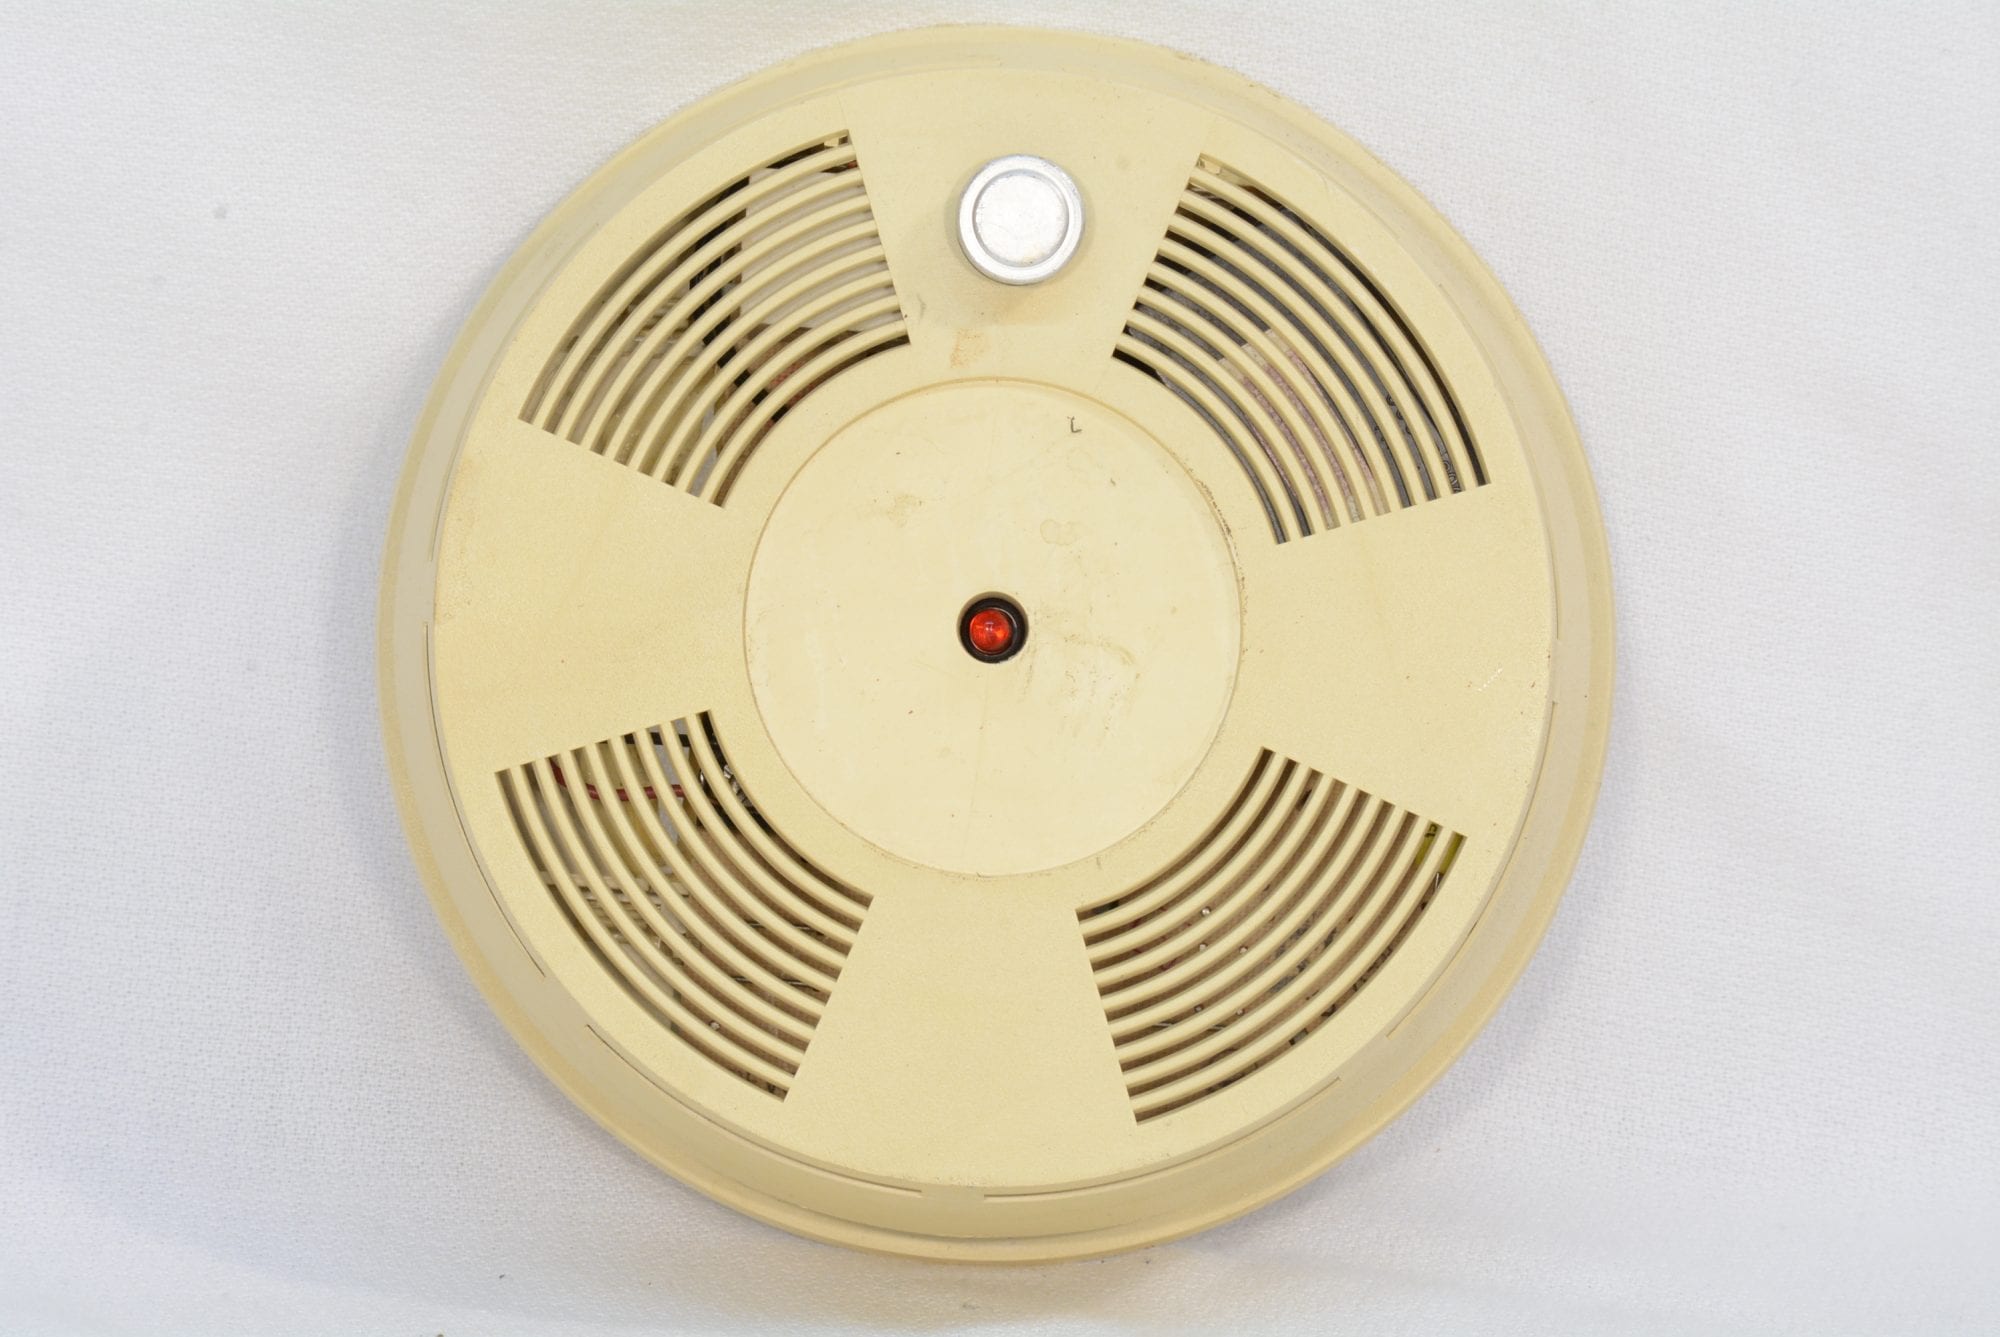 dsc alarm panel smoke detector